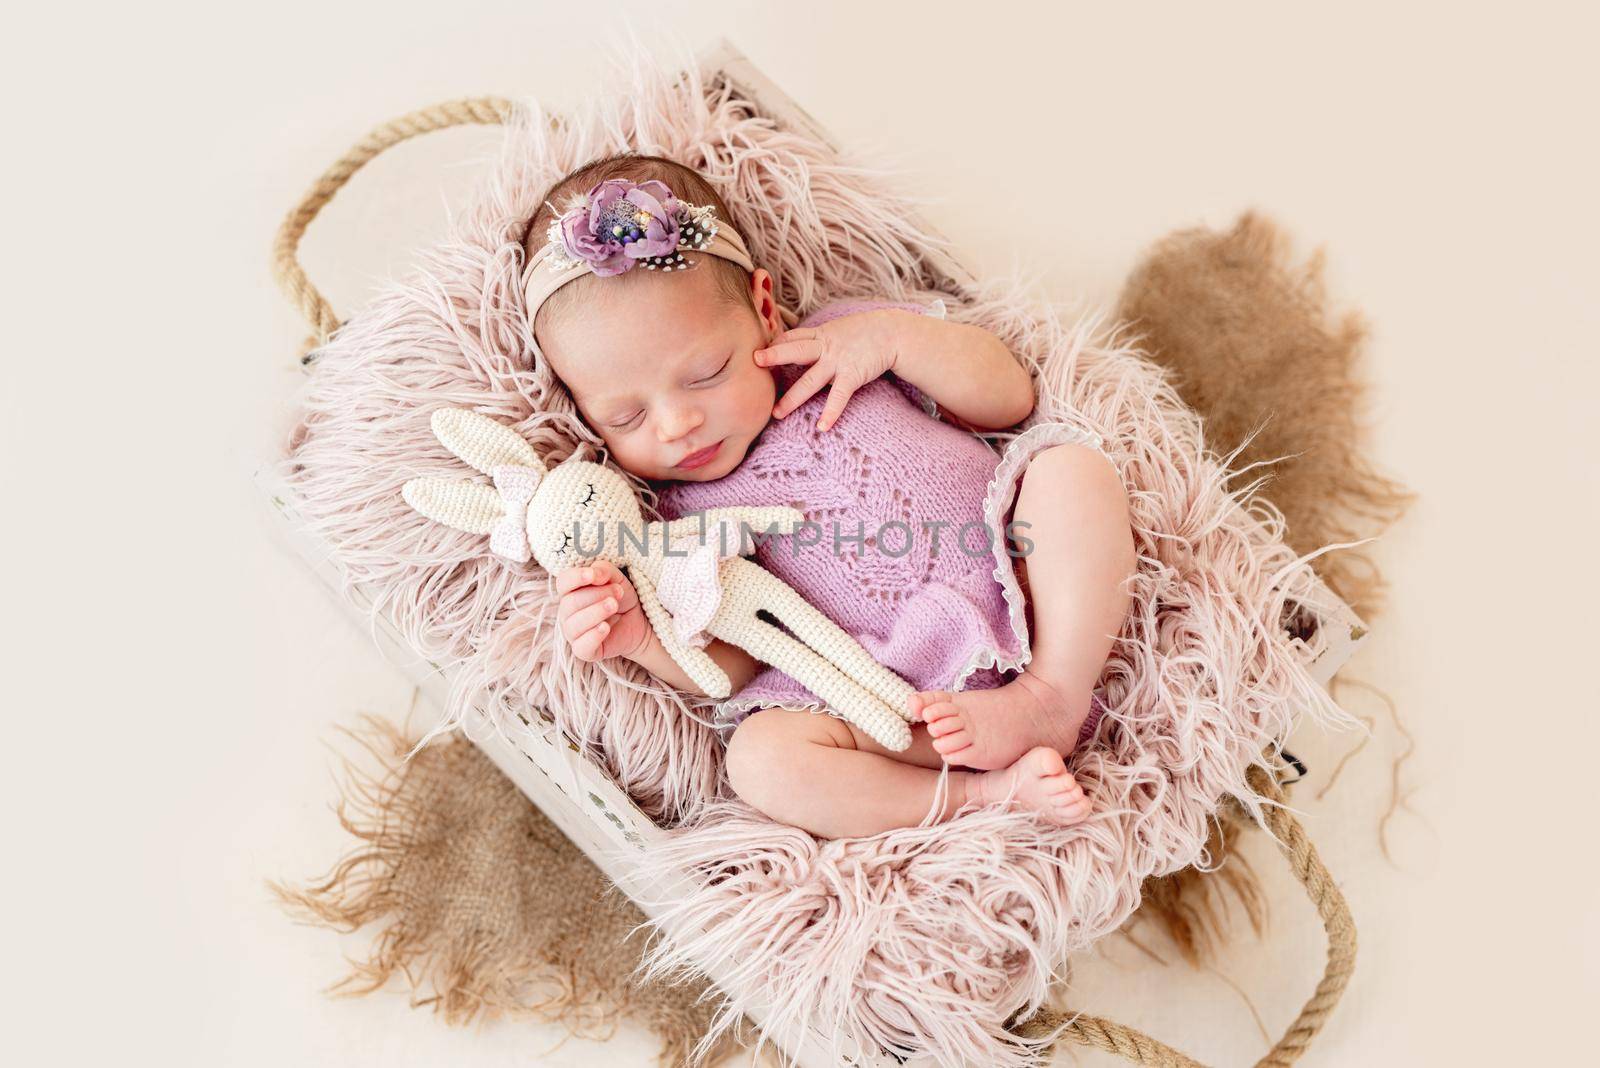 Sleeping newborn baby girl in a pink dress